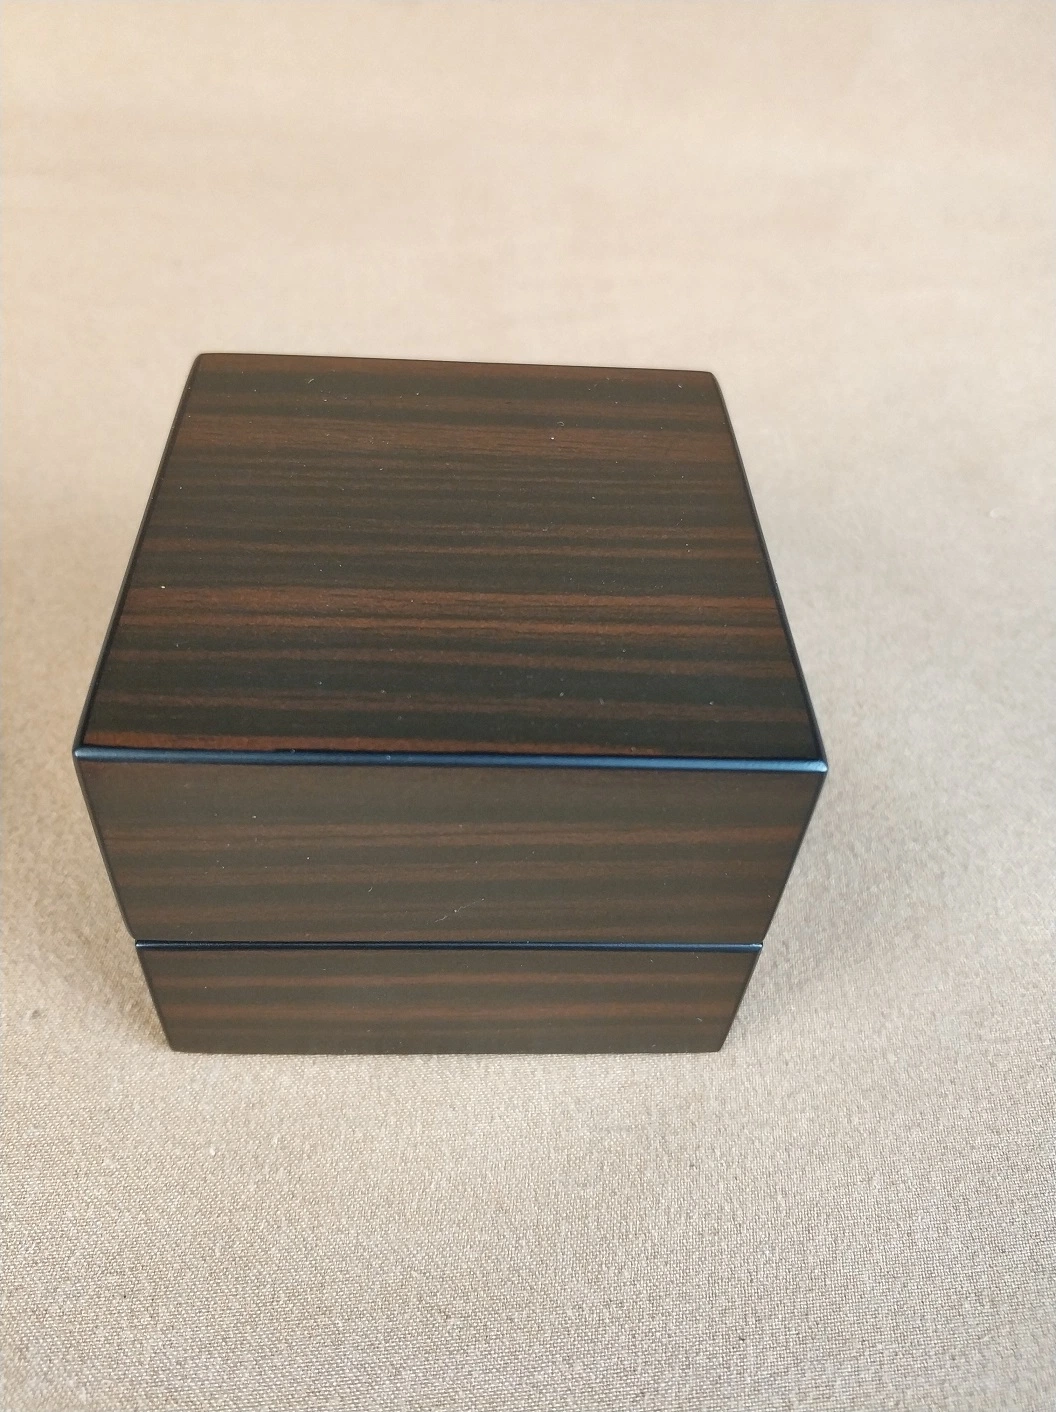 Wooden Jewelry Box /Ring Box/Gift Box